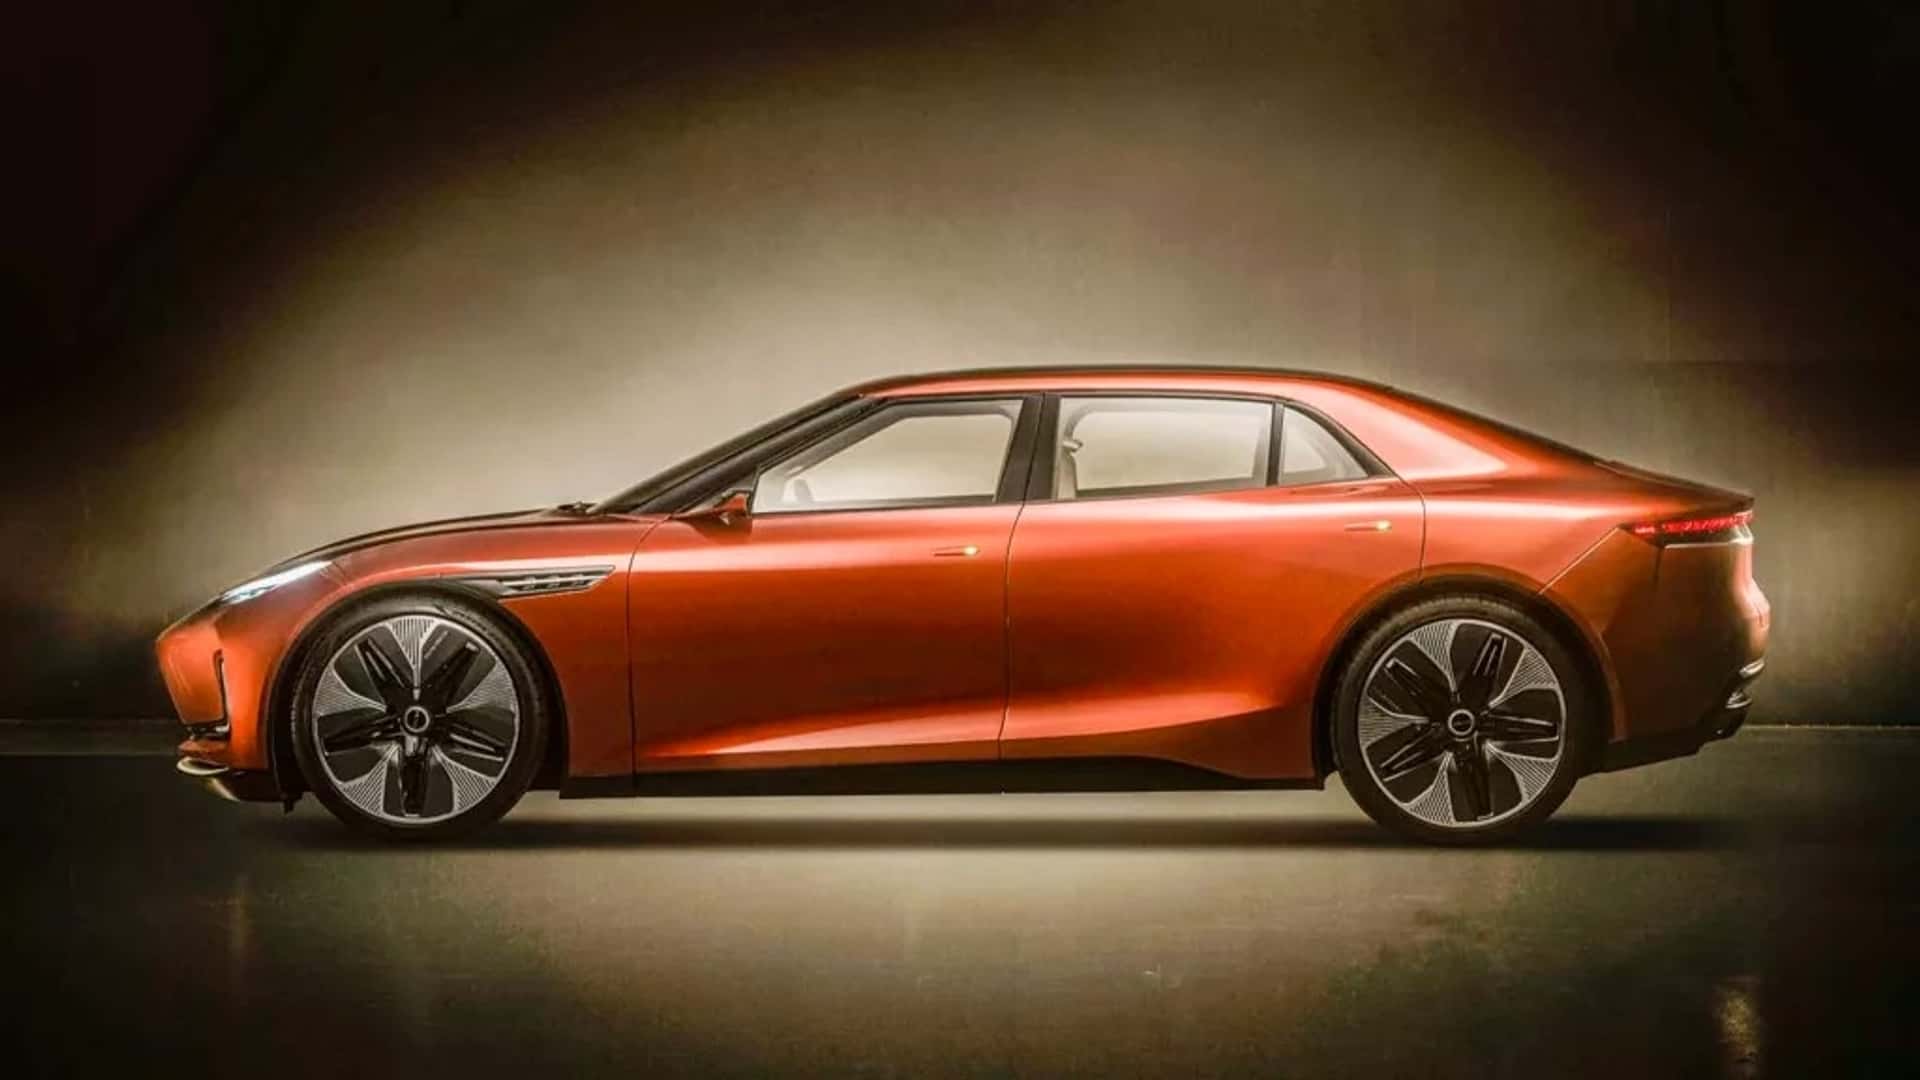 secretive nevs emily gt revealed as saab-inspired stillborn electric sports sedan